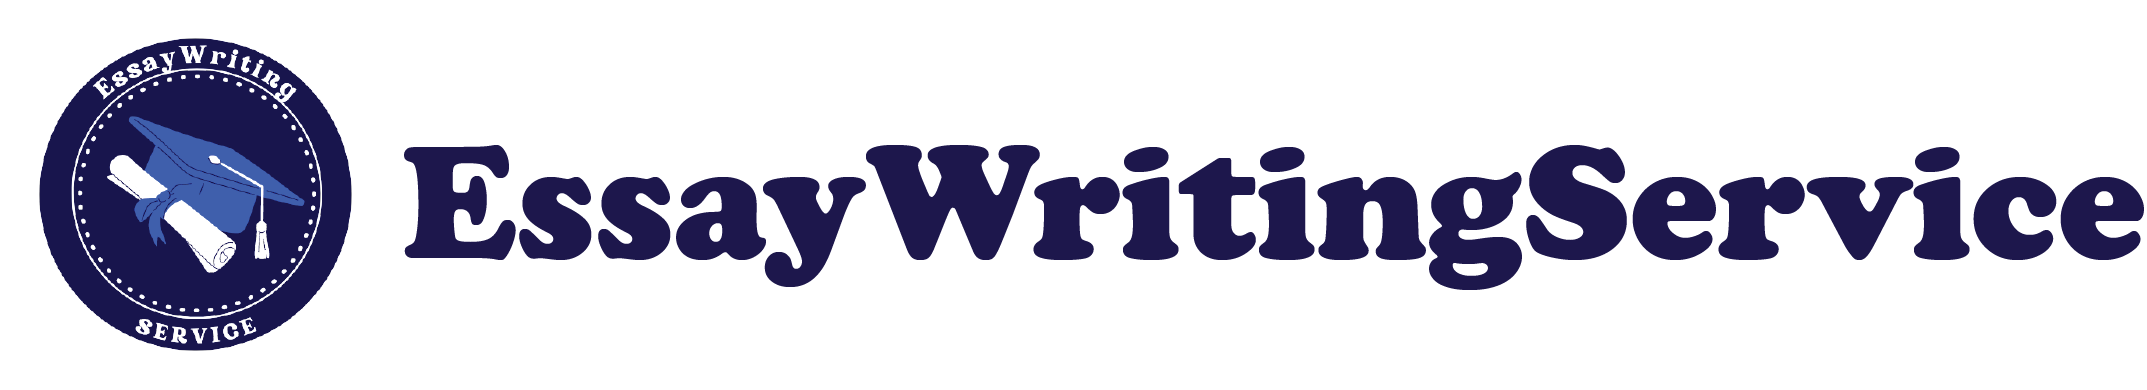 essay-writing-service-logo-removebg-preview